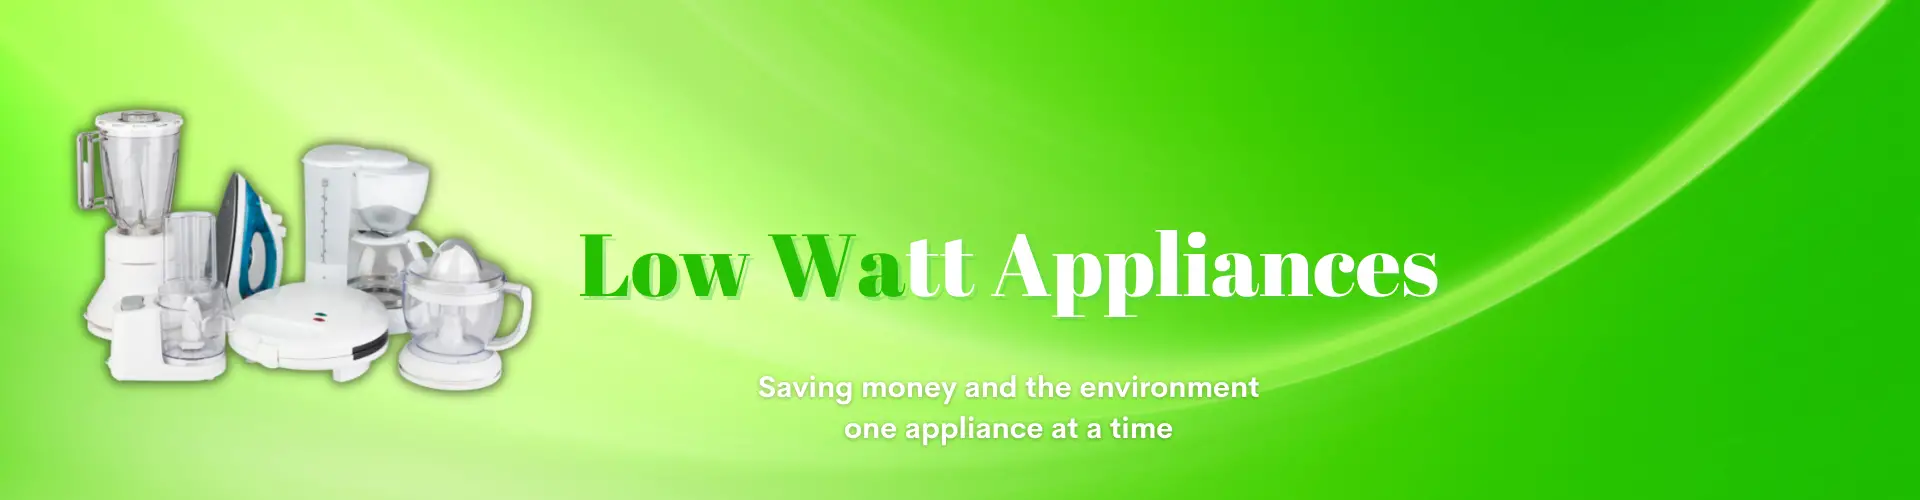 Low Watt Appliances Background w Tagline